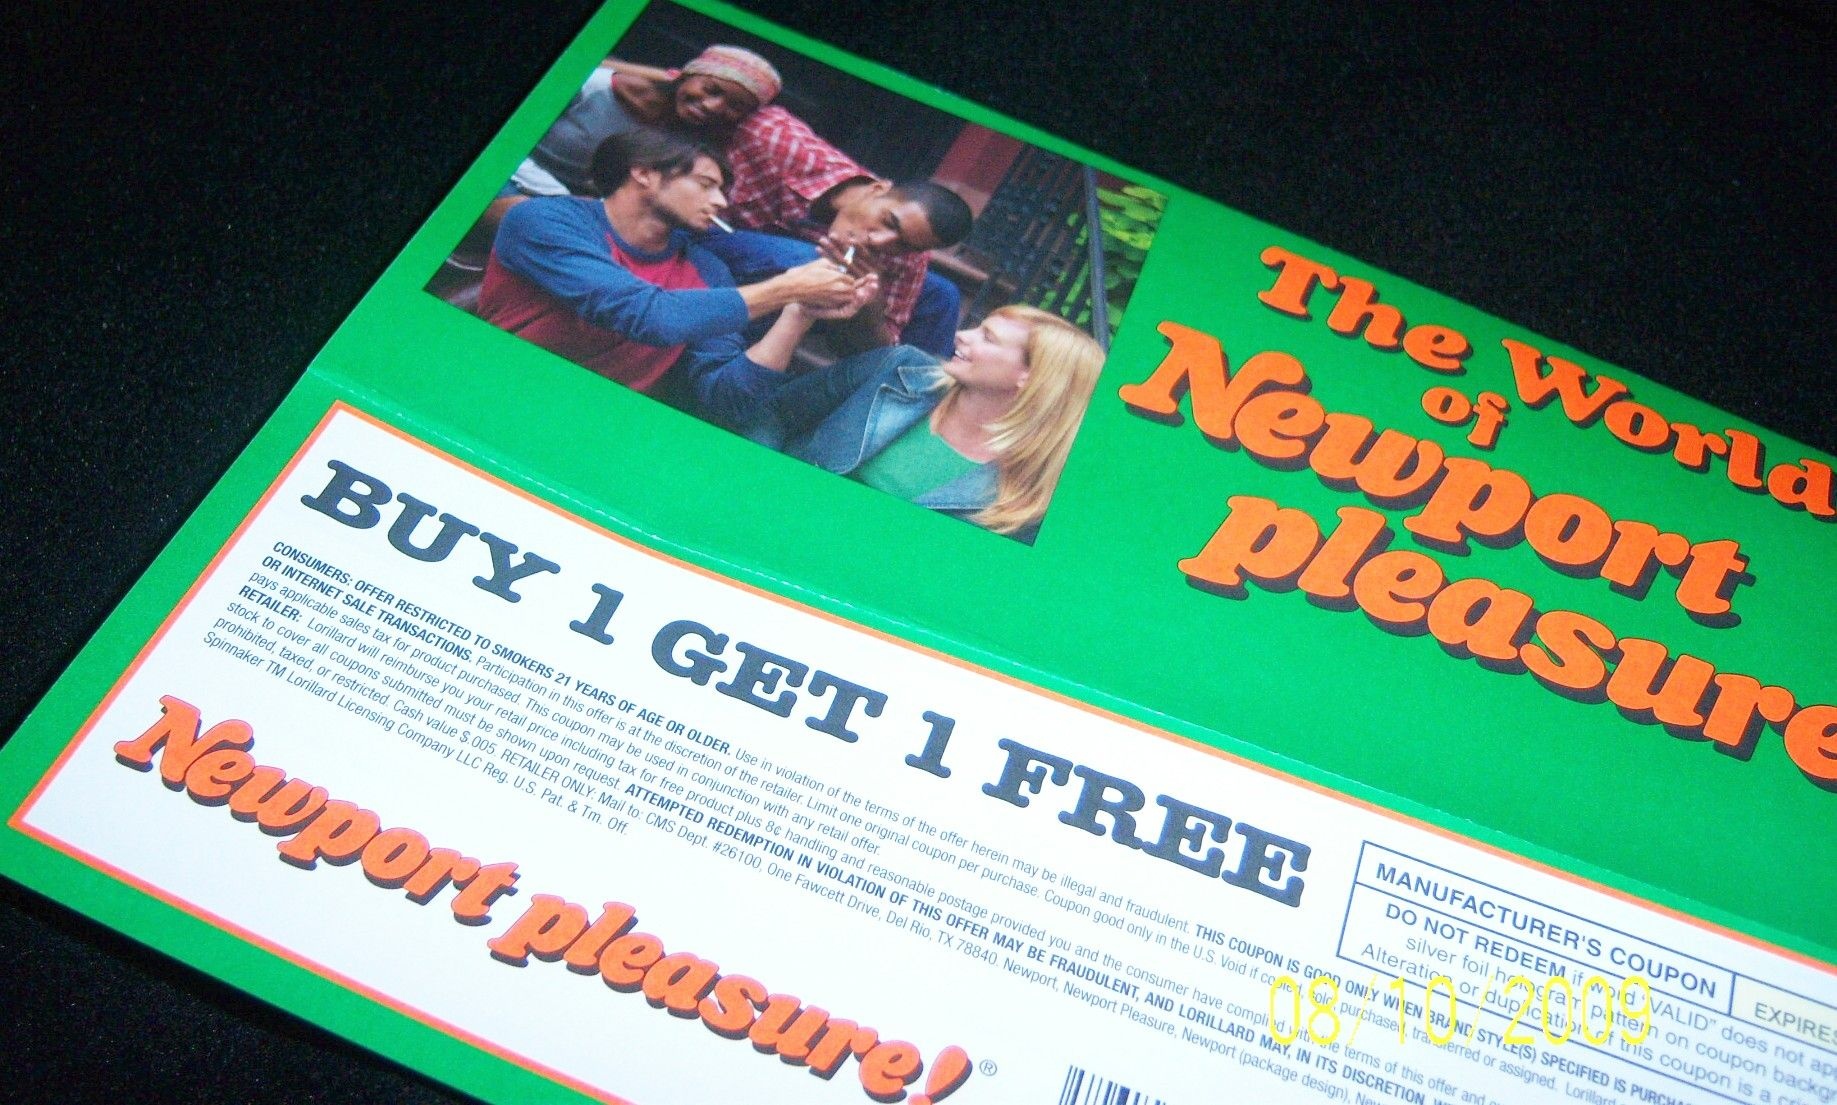 Pindebi On Coupons | Newport Cigarettes, Cigarette Coupons Free - Free Printable Newport Cigarette Coupons